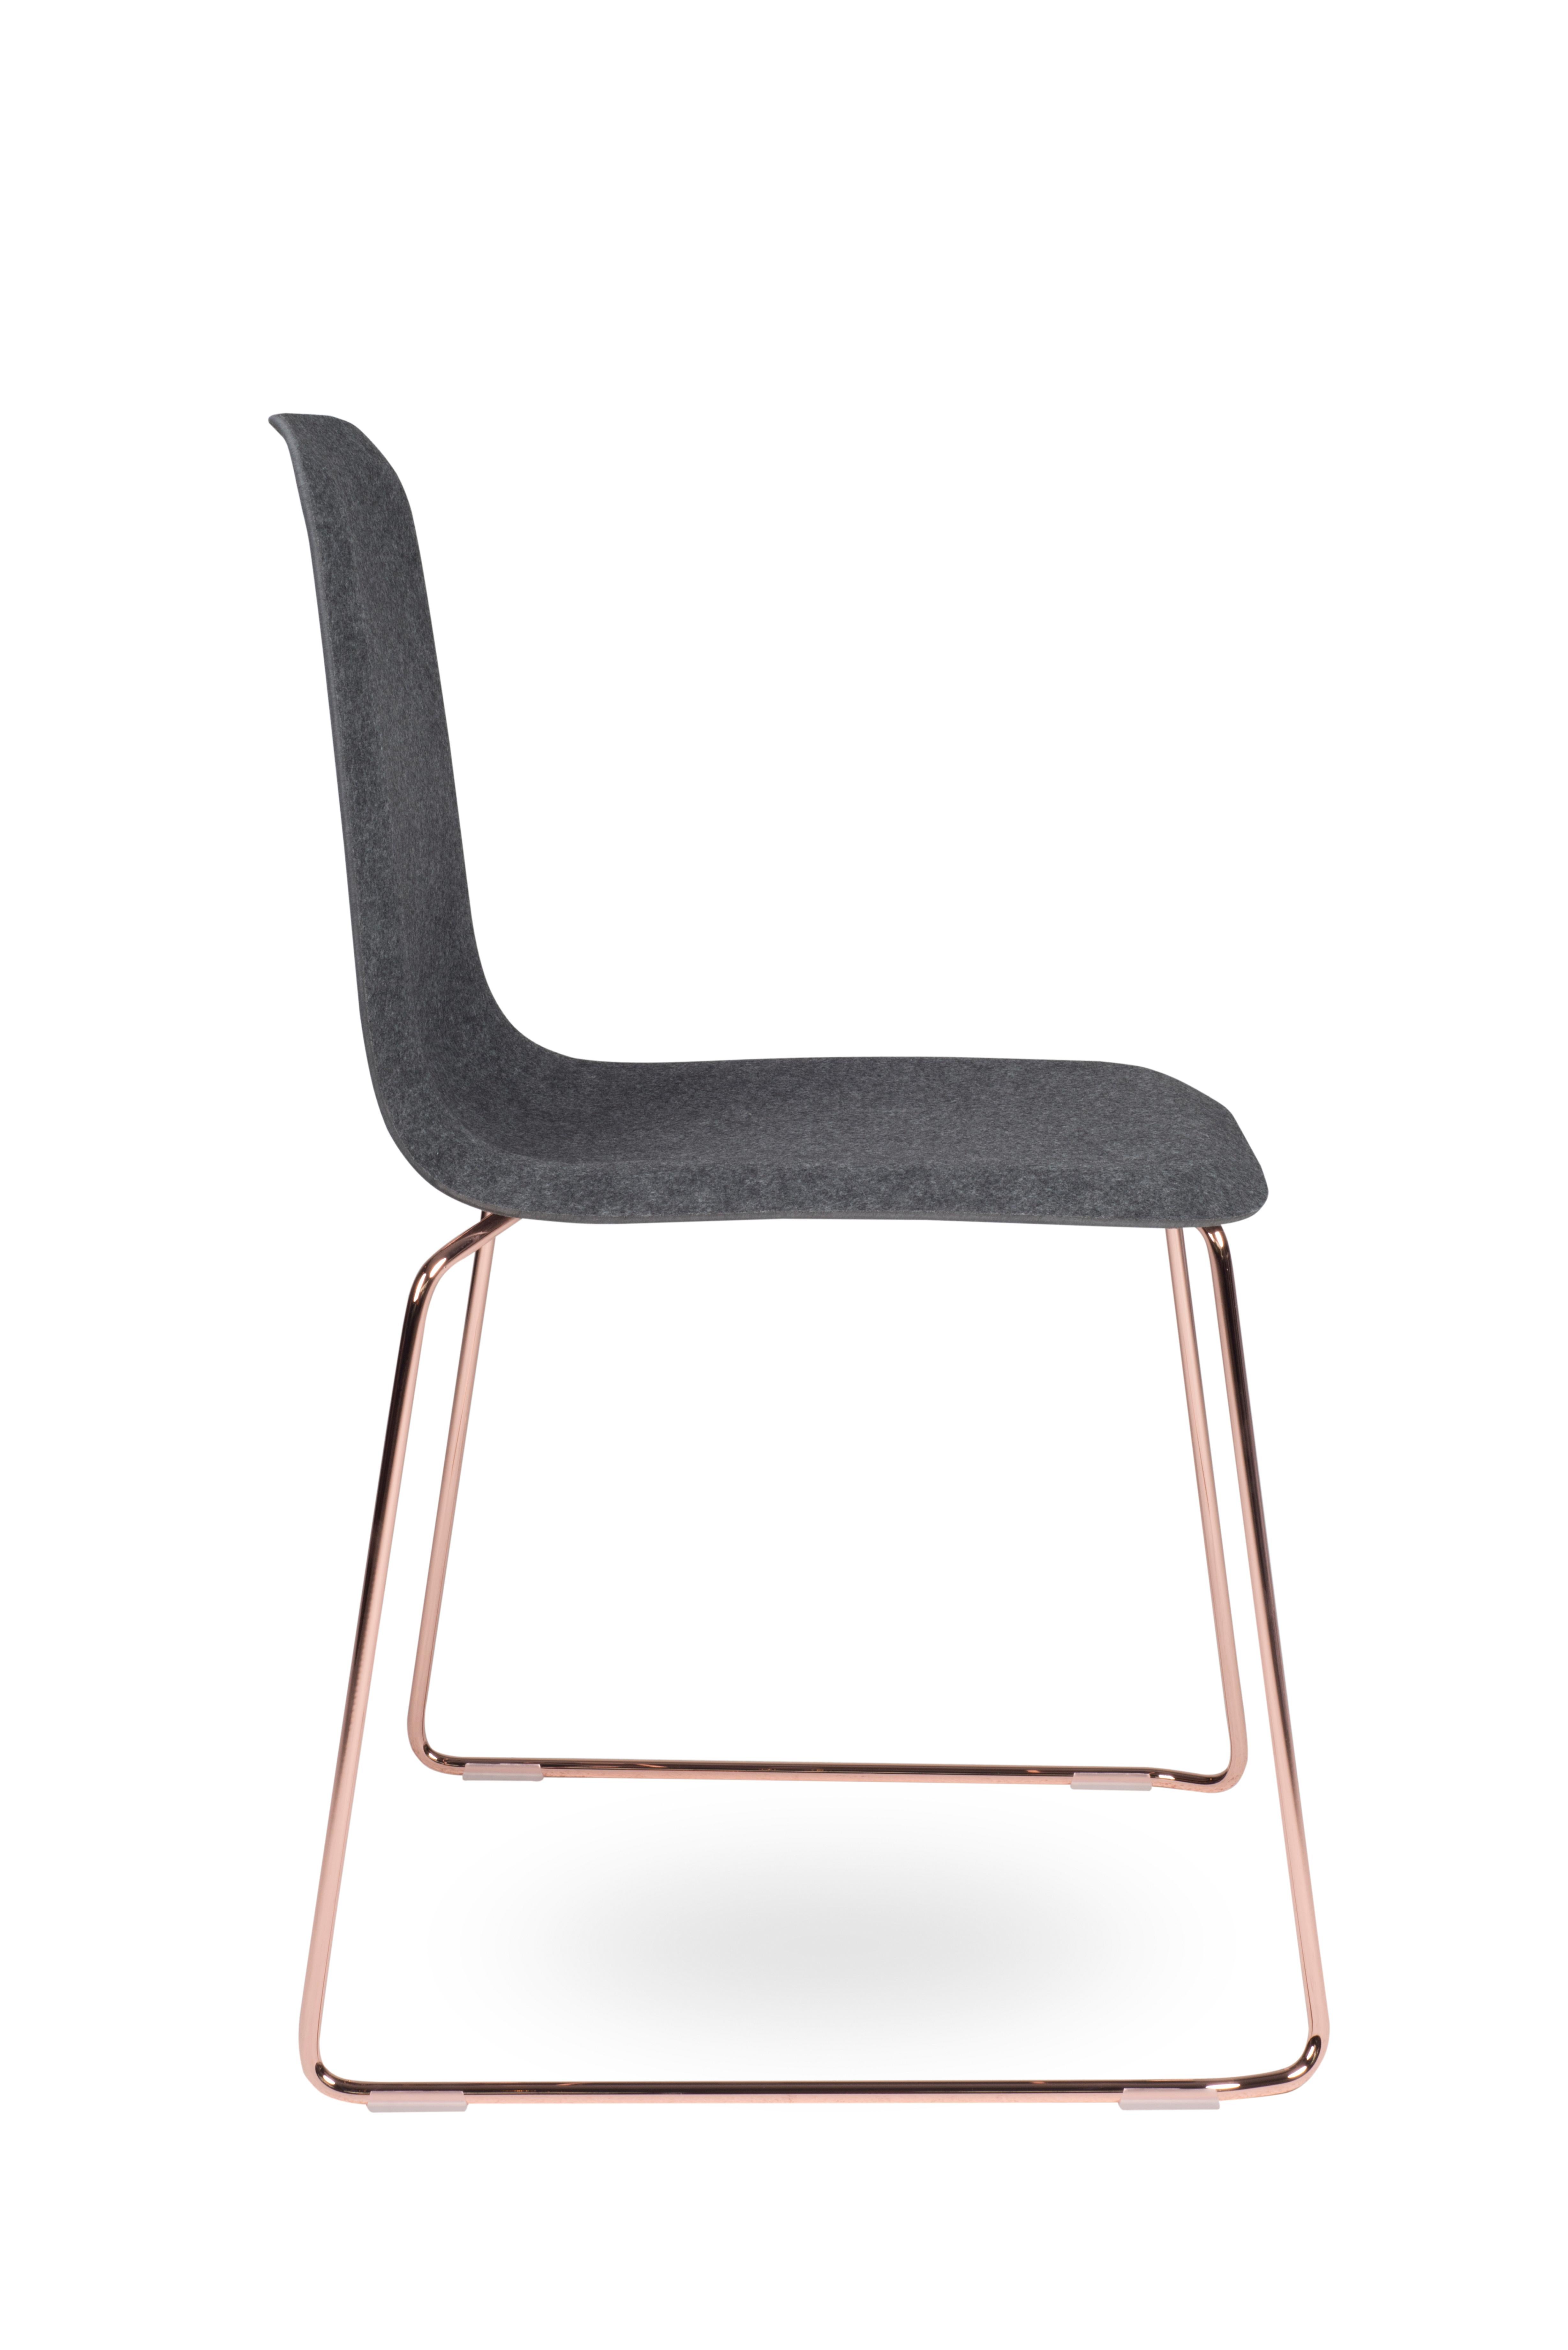 Modern Lensvelt This 141 Felt Chair For Sale